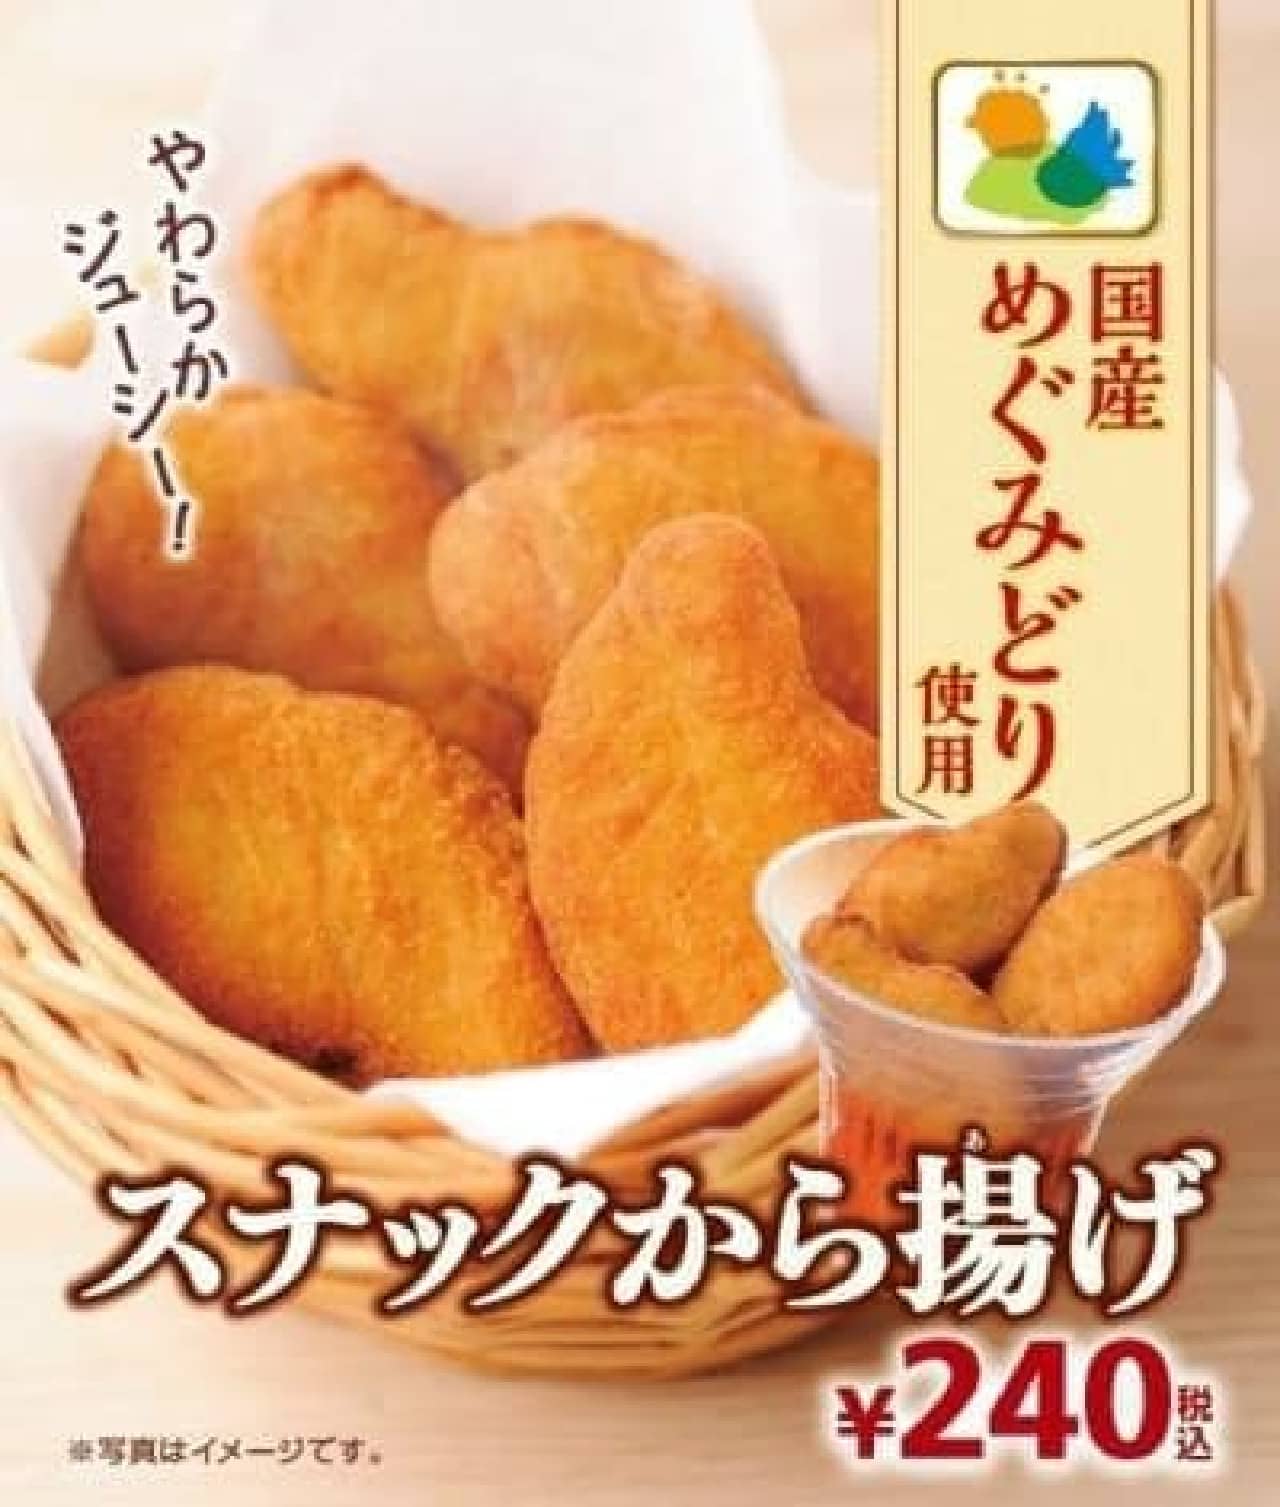 Juicy fried chicken using domestic "brand chicken"